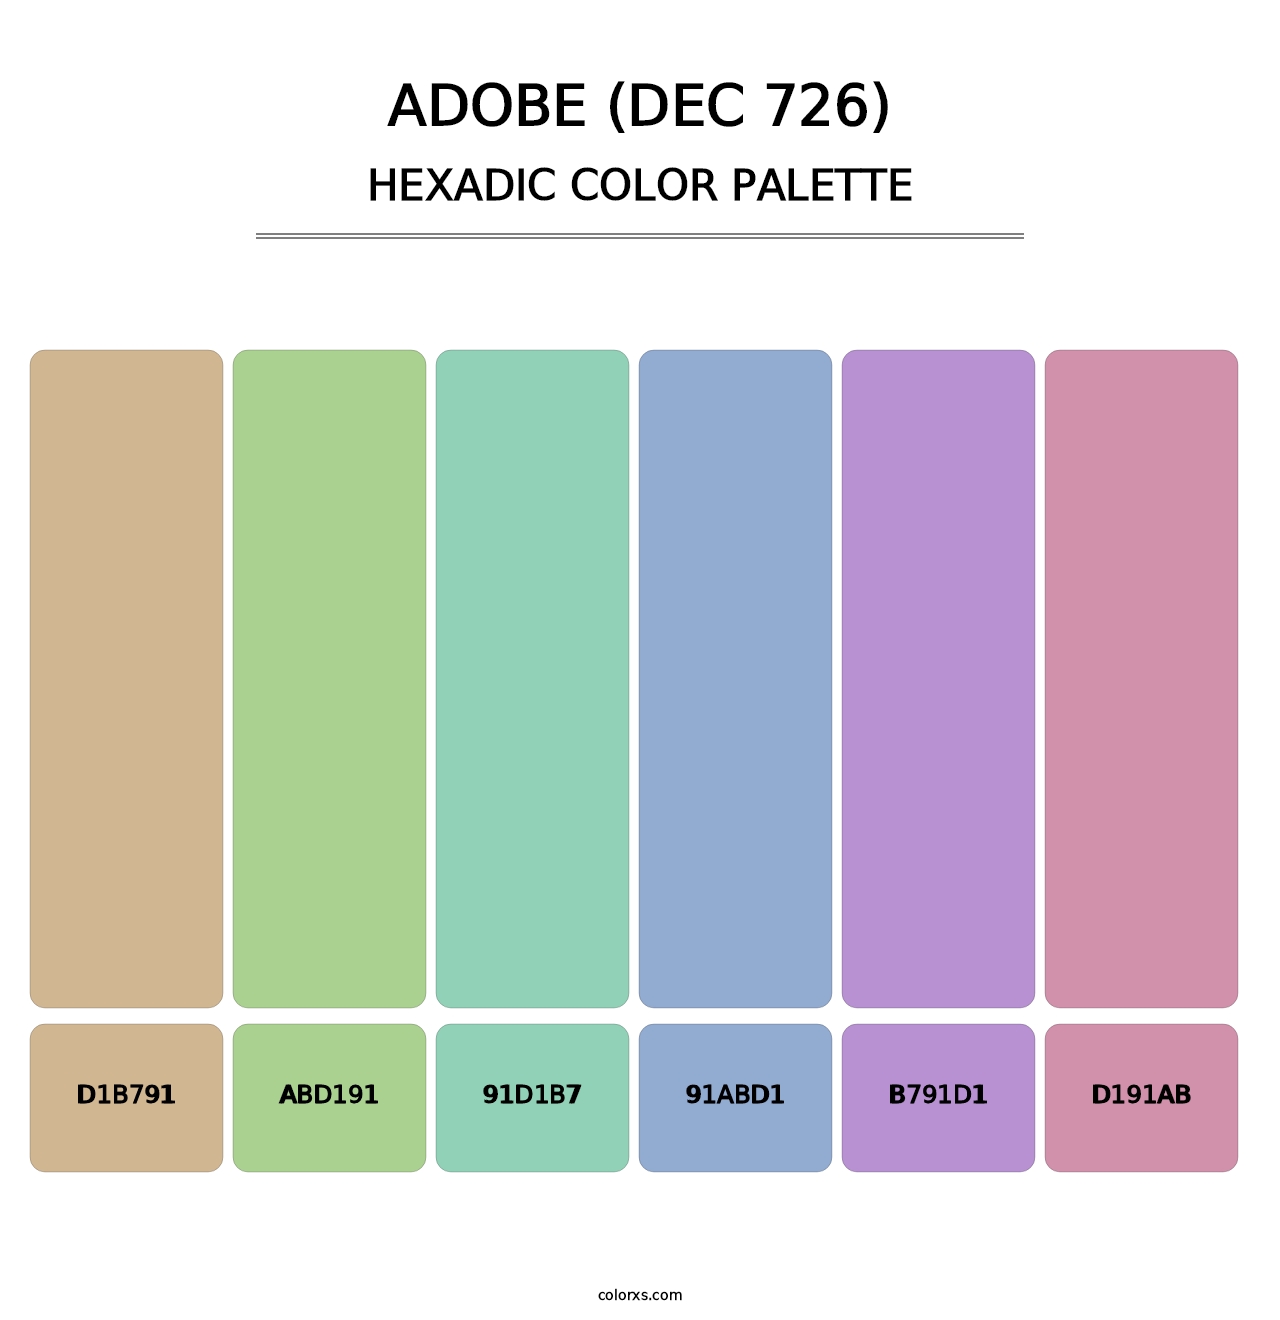 Adobe (DEC 726) - Hexadic Color Palette